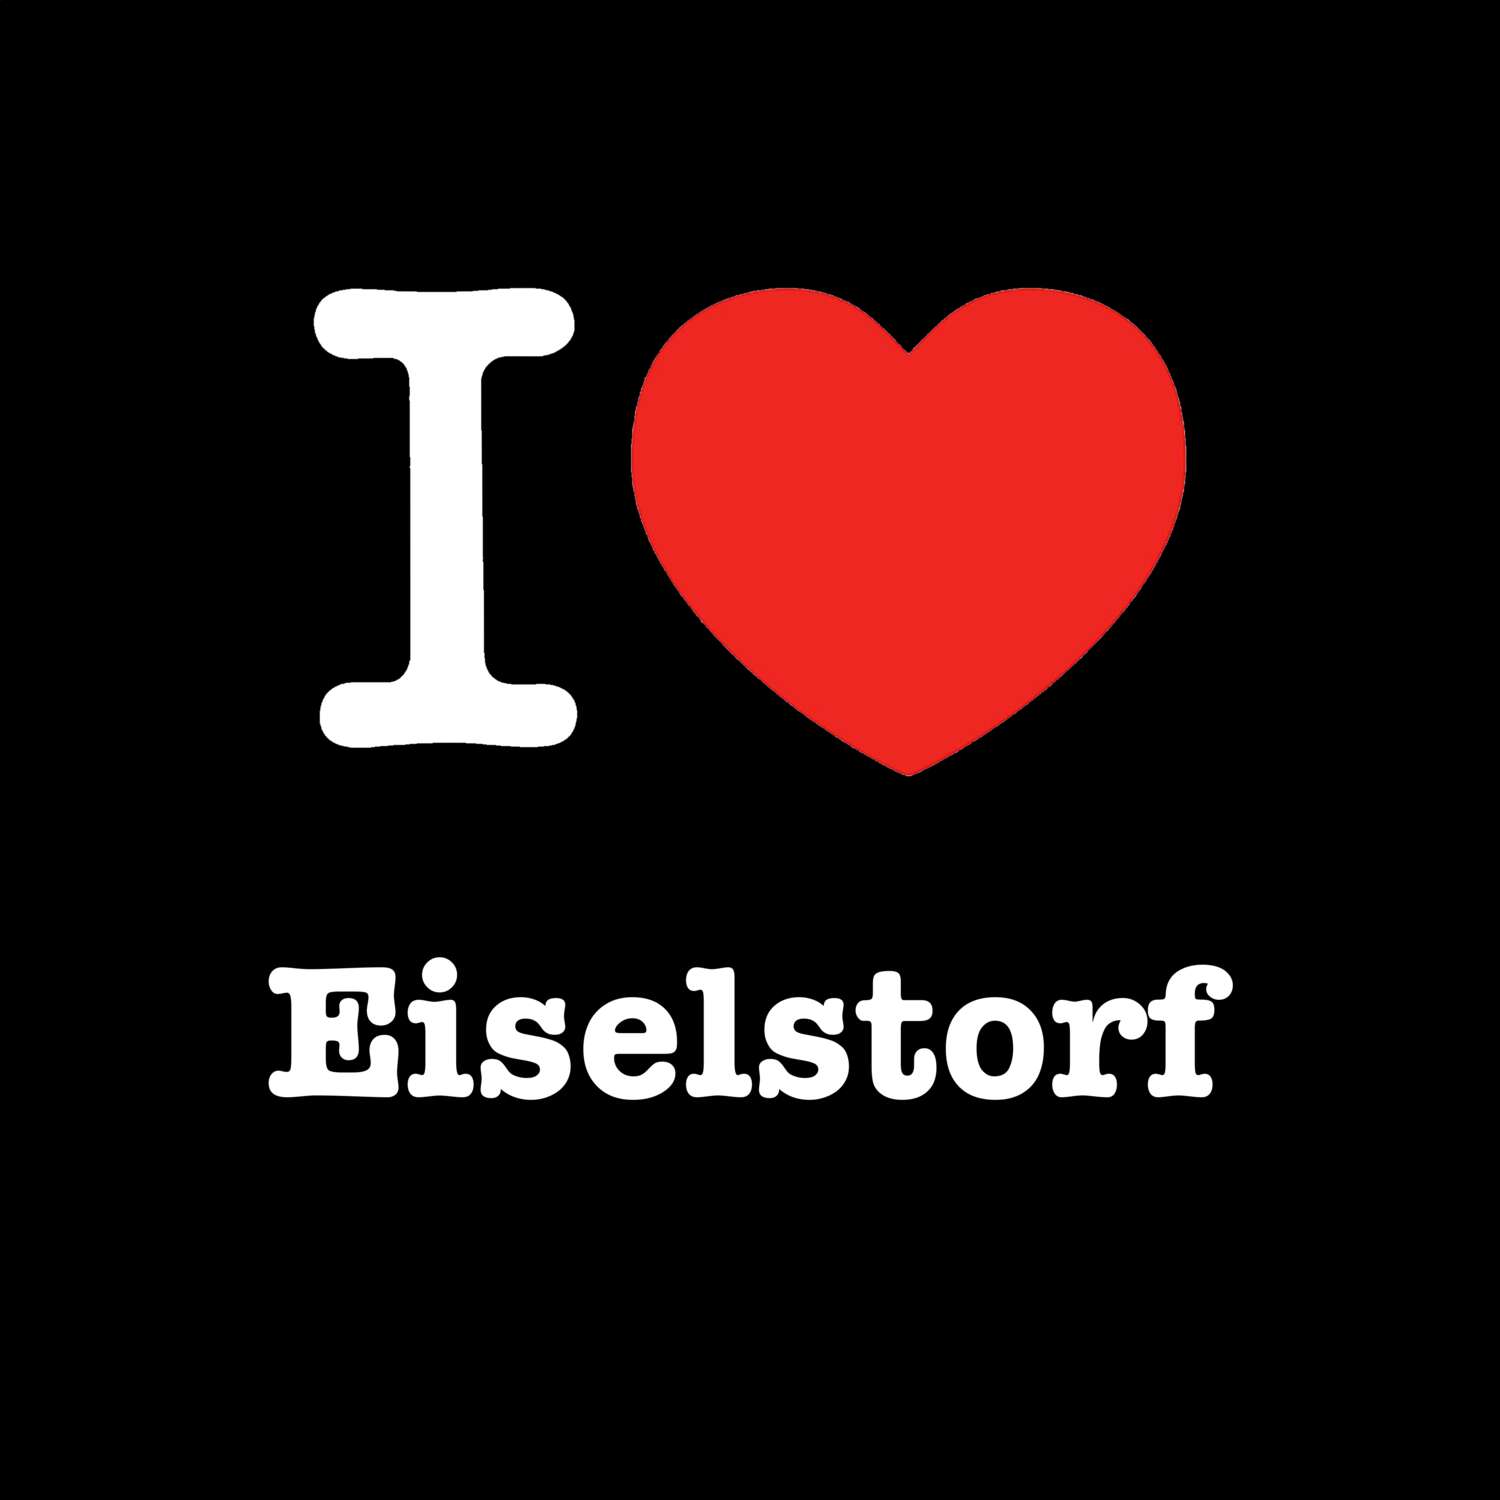 Eiselstorf T-Shirt »I love«